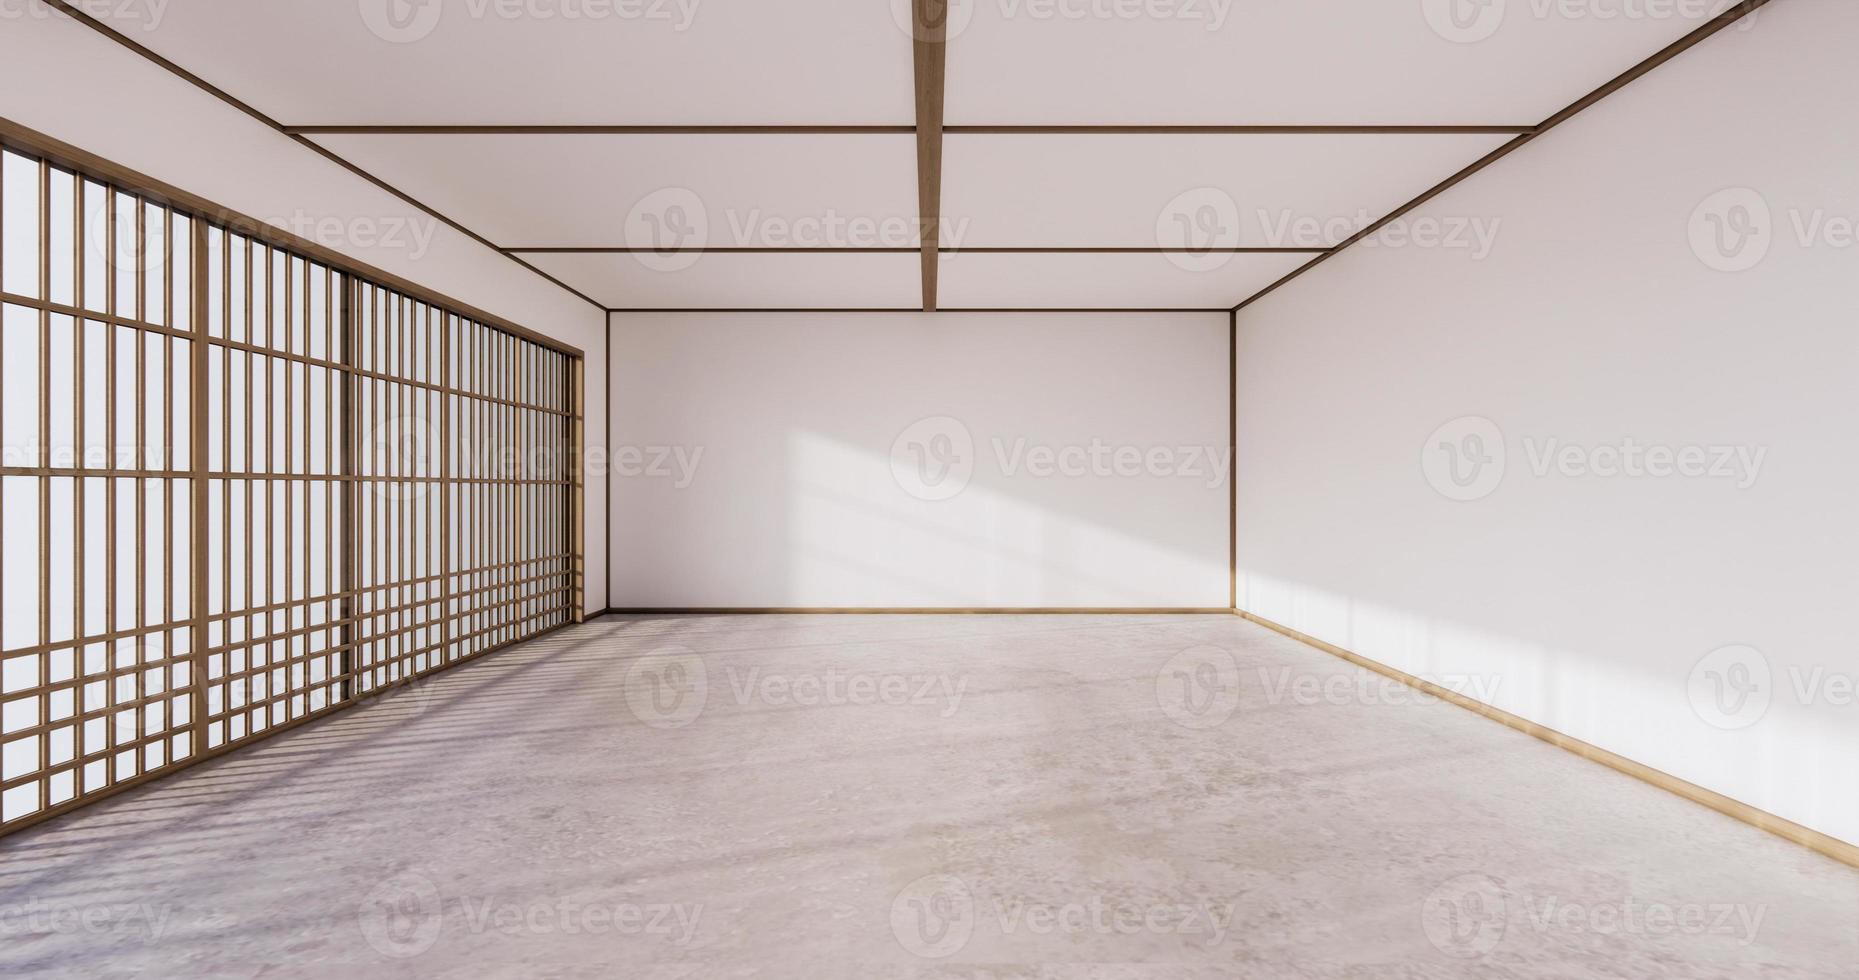 indoor lege kamer japan stijl. 3D-rendering foto